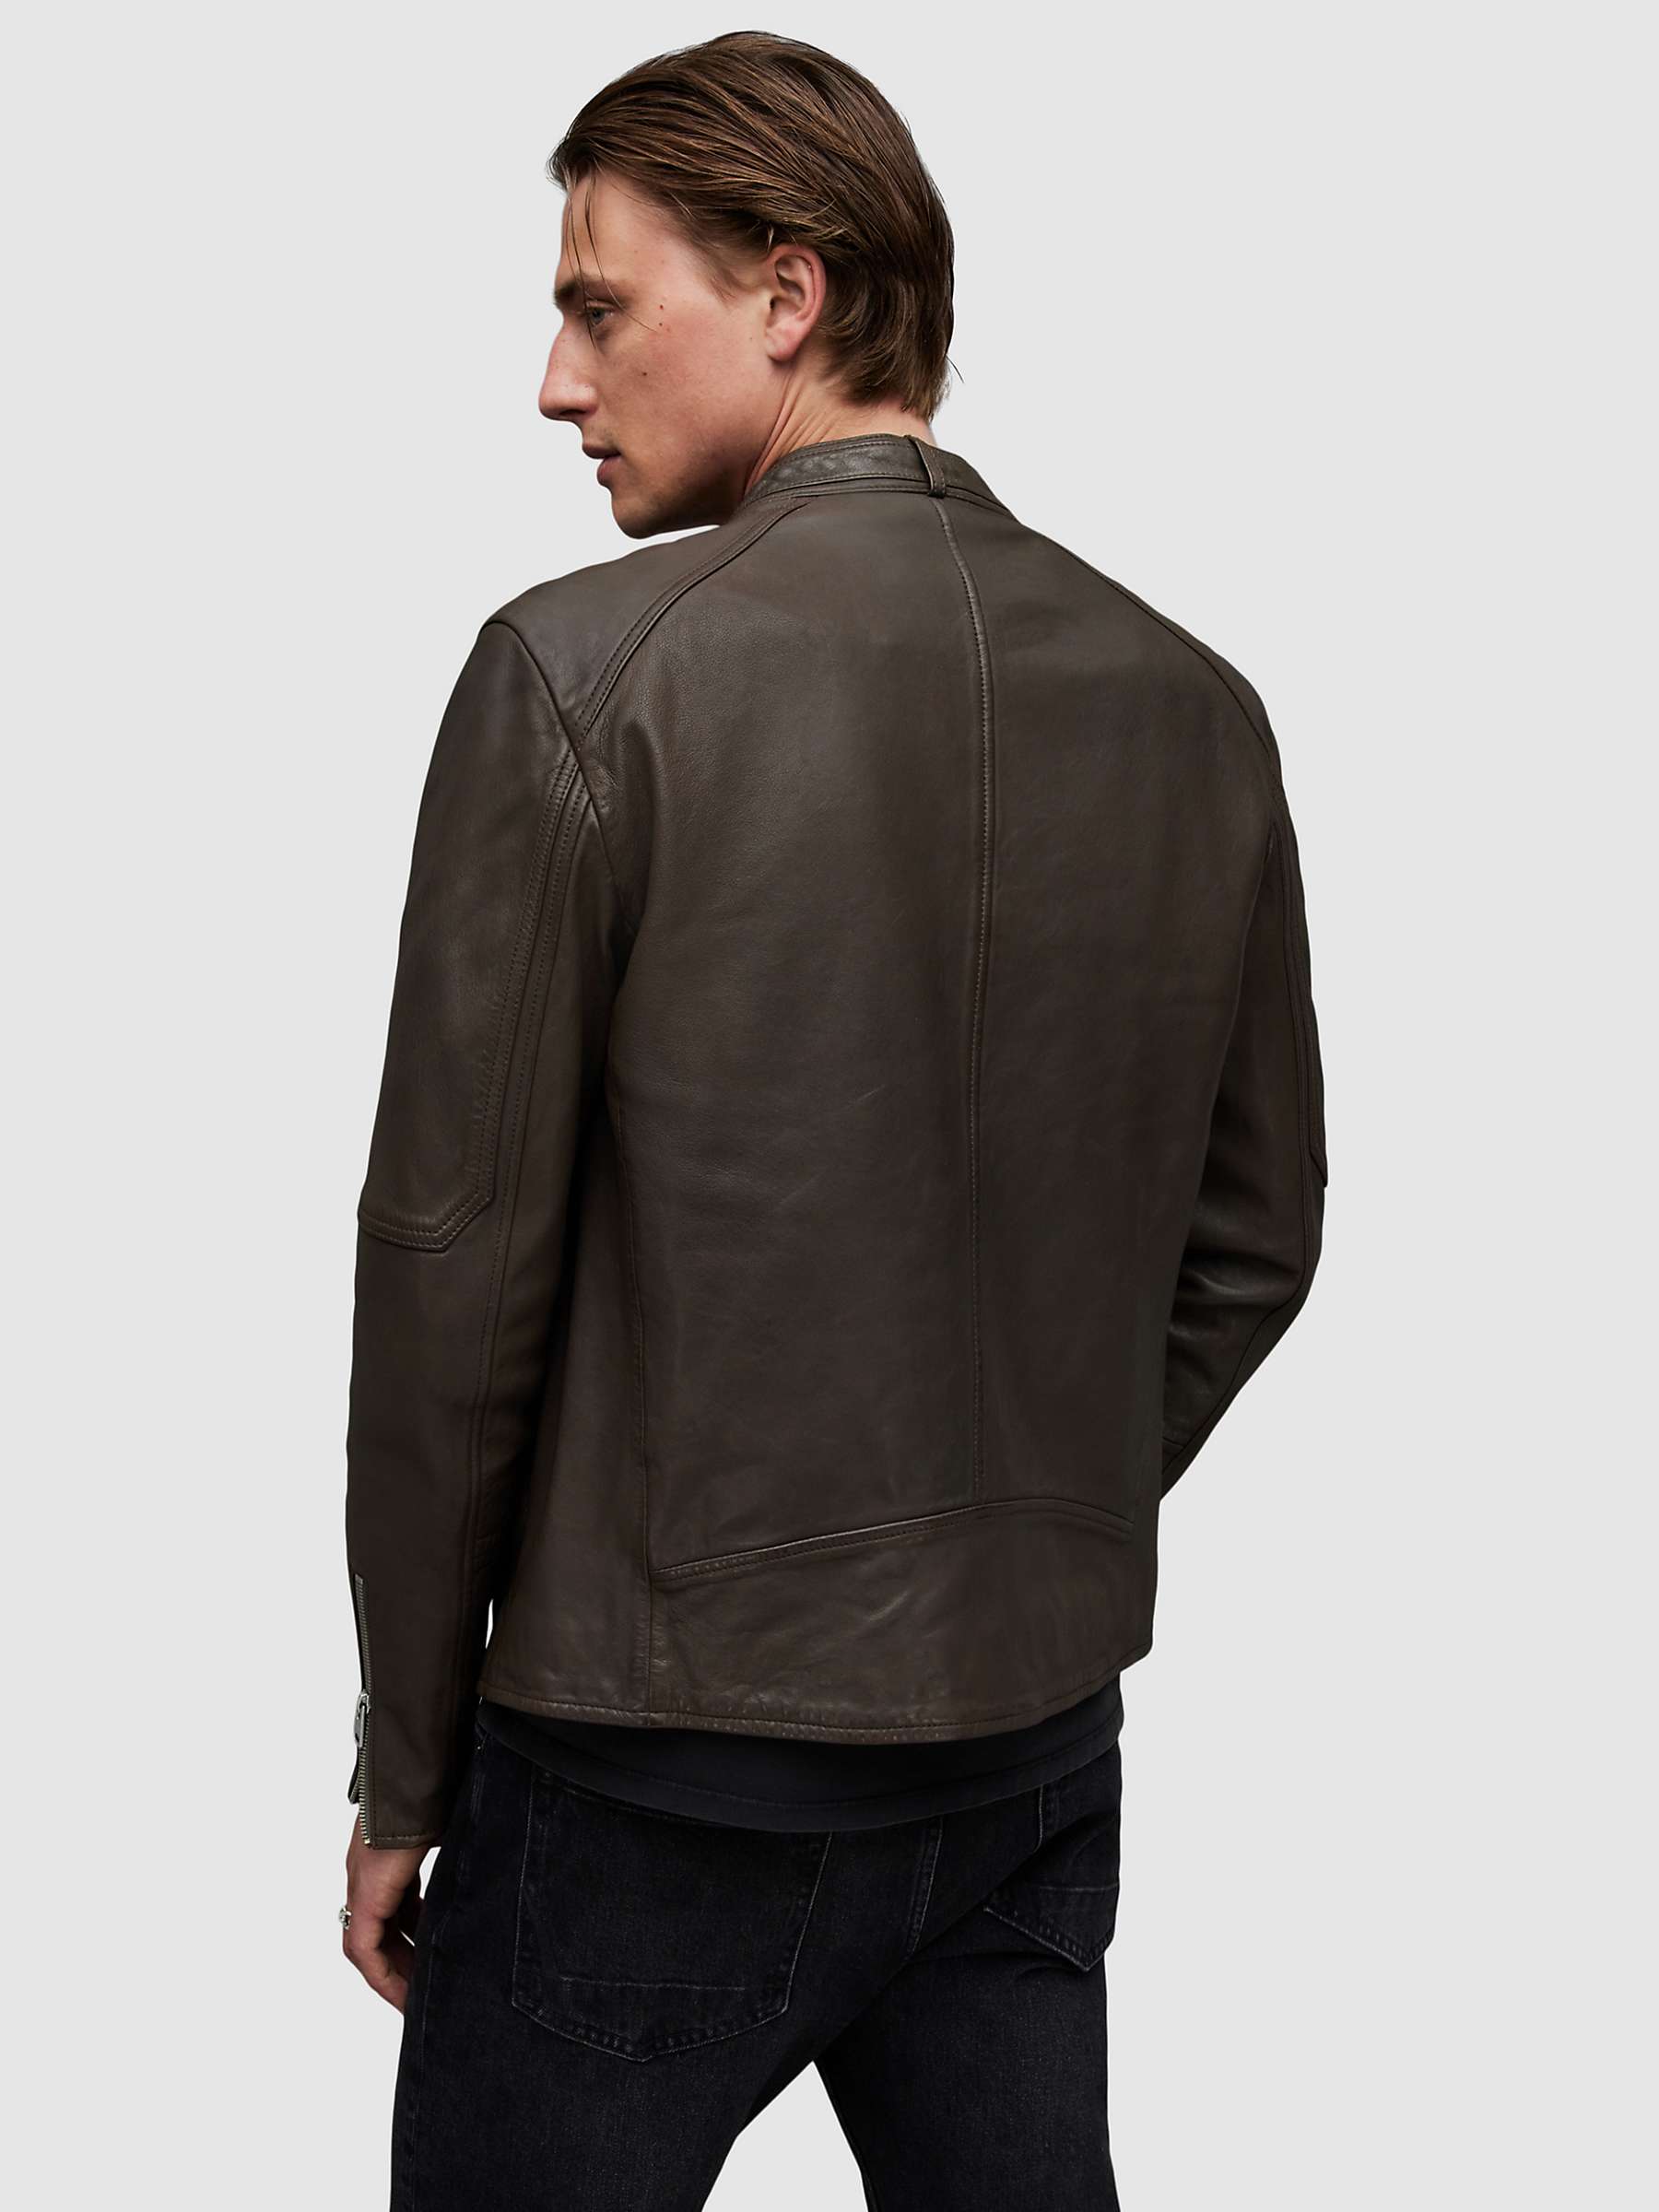 AllSaints Cora Leather Jacket, Splinter Brown at John Lewis & Partners